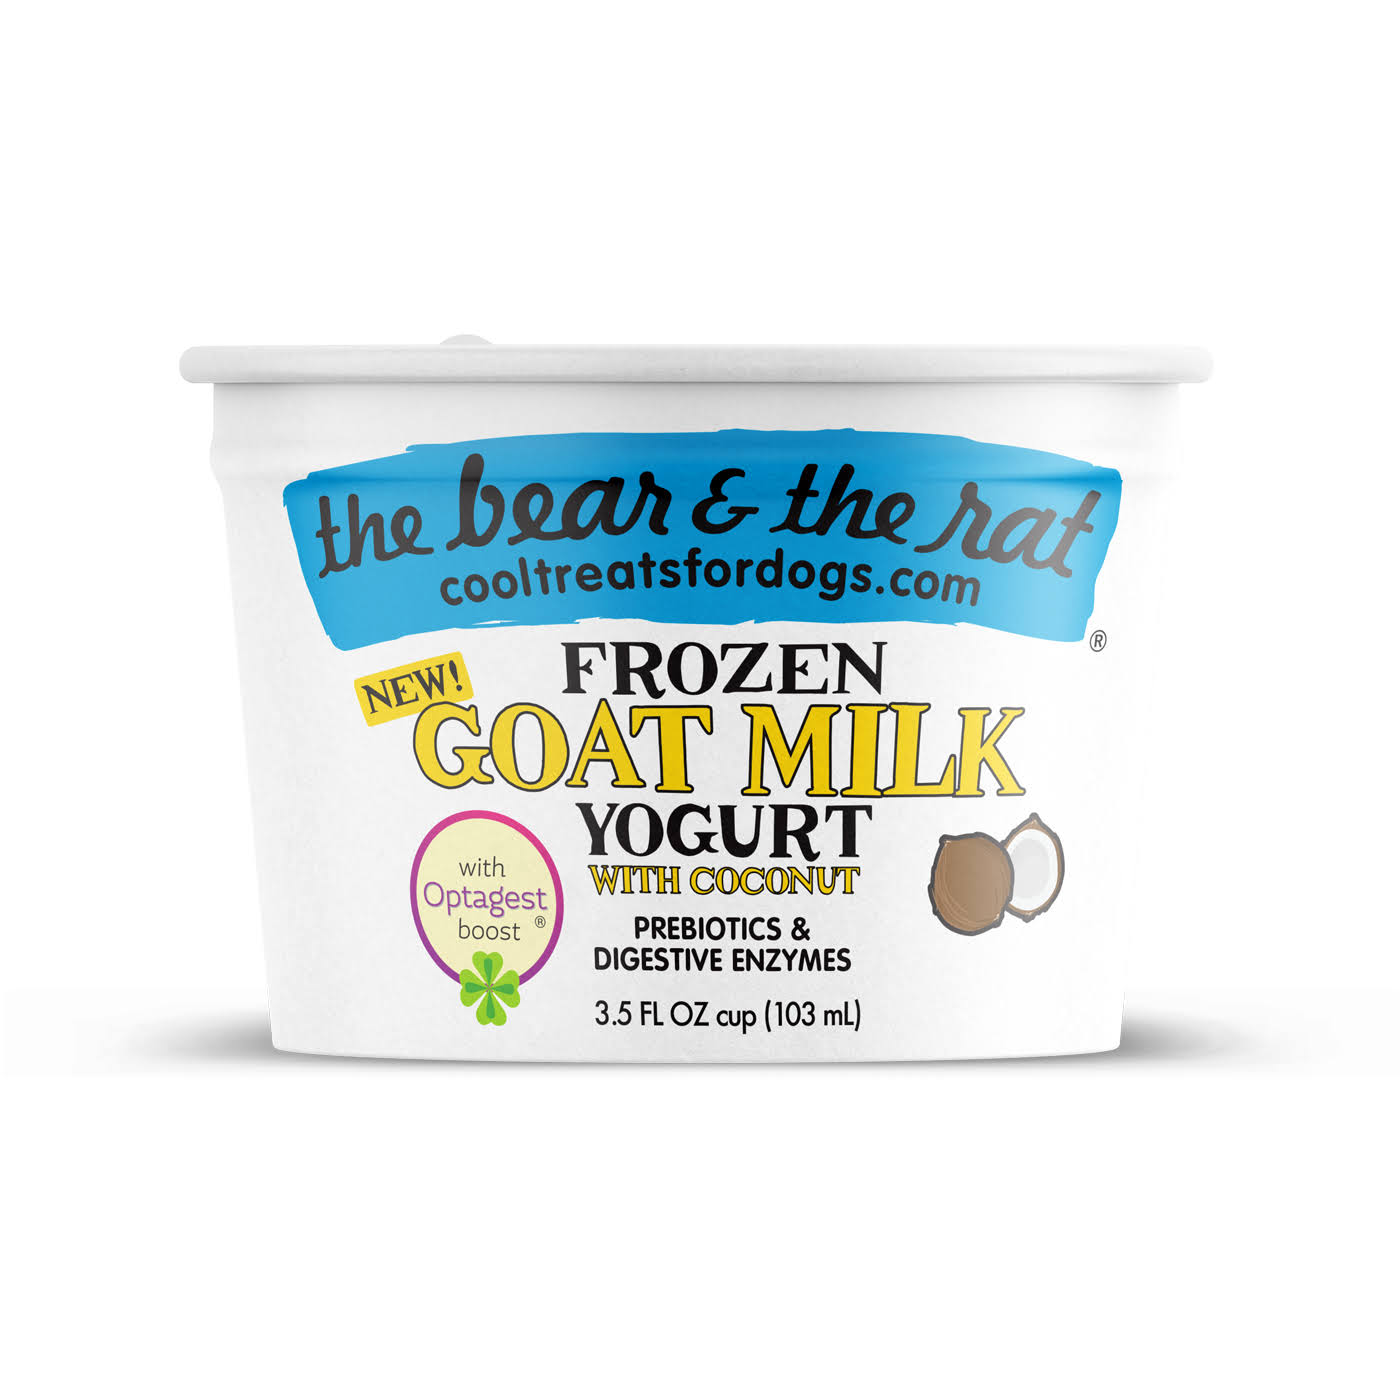 The Bear & The Rat Frozen Goat Milk Yogurt with Coconut